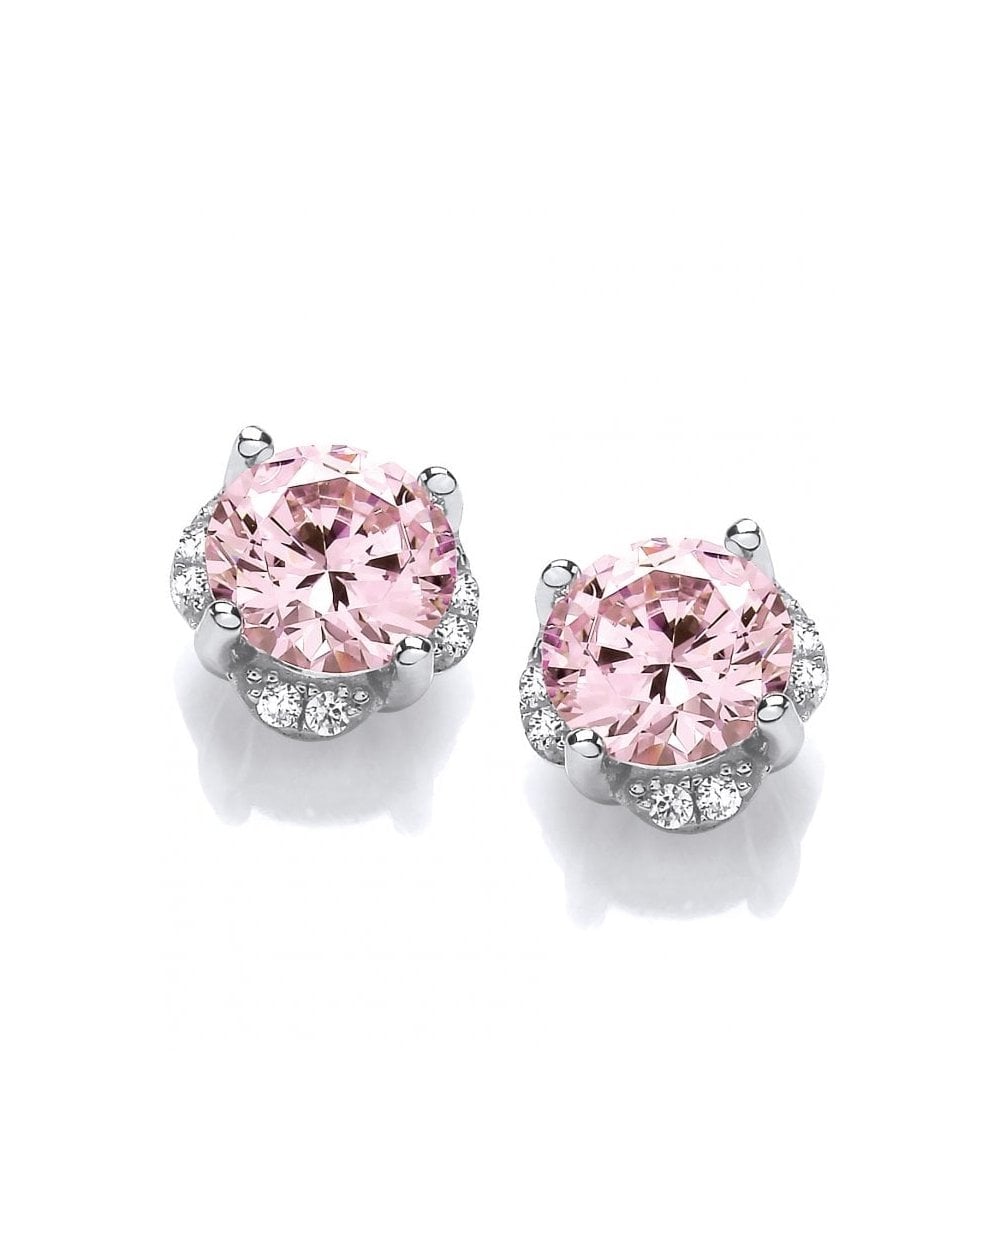 In the Pink Diamond Cubic Zirconia Earrings